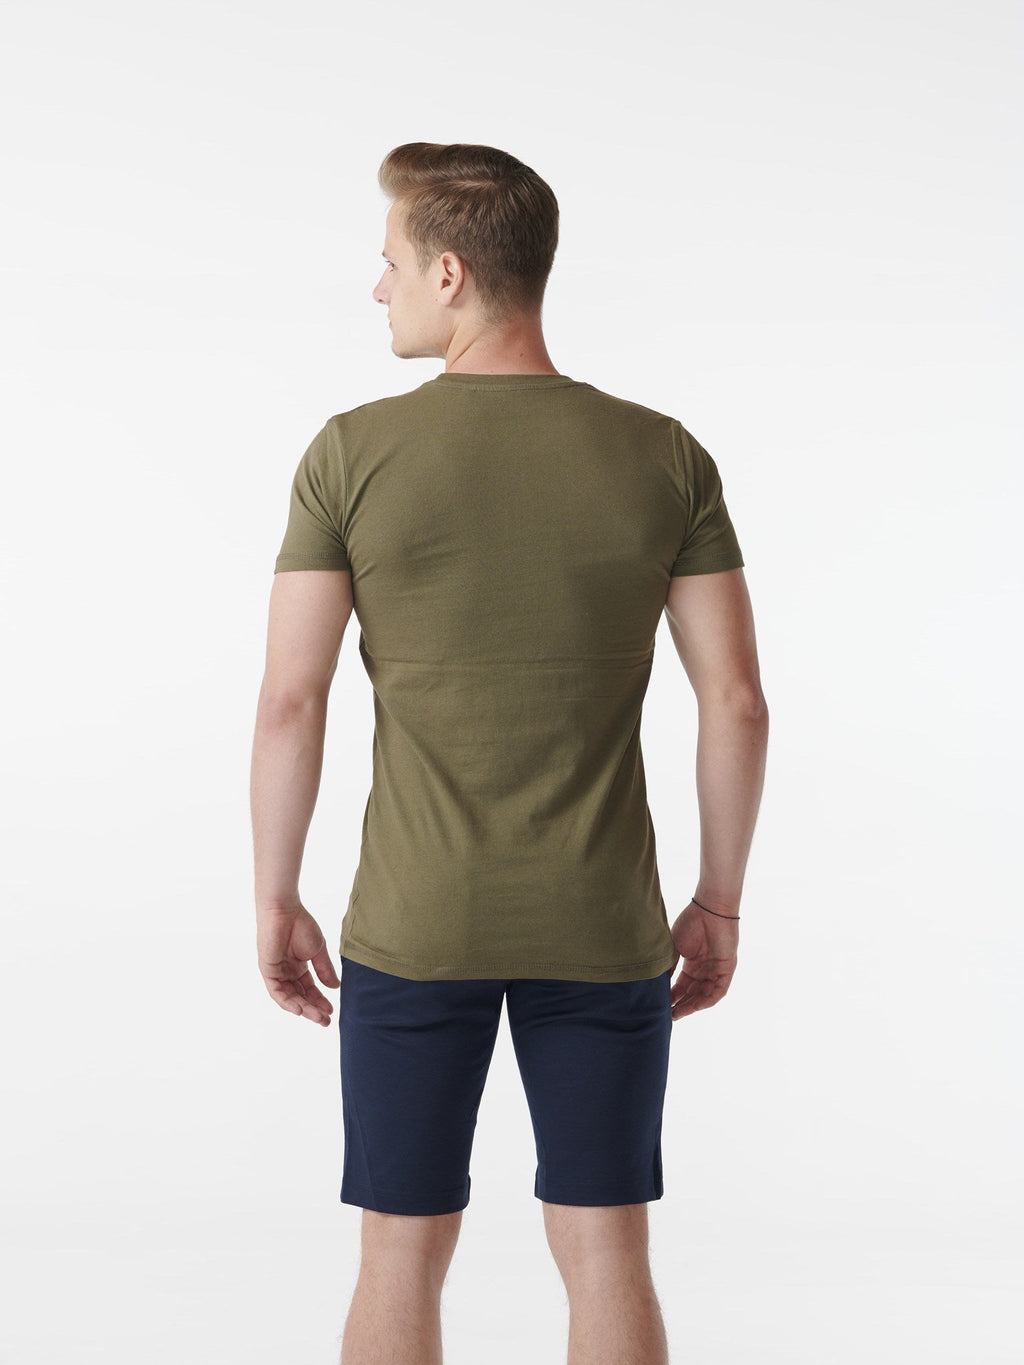 Muscle T -Shirt - Armeegrün